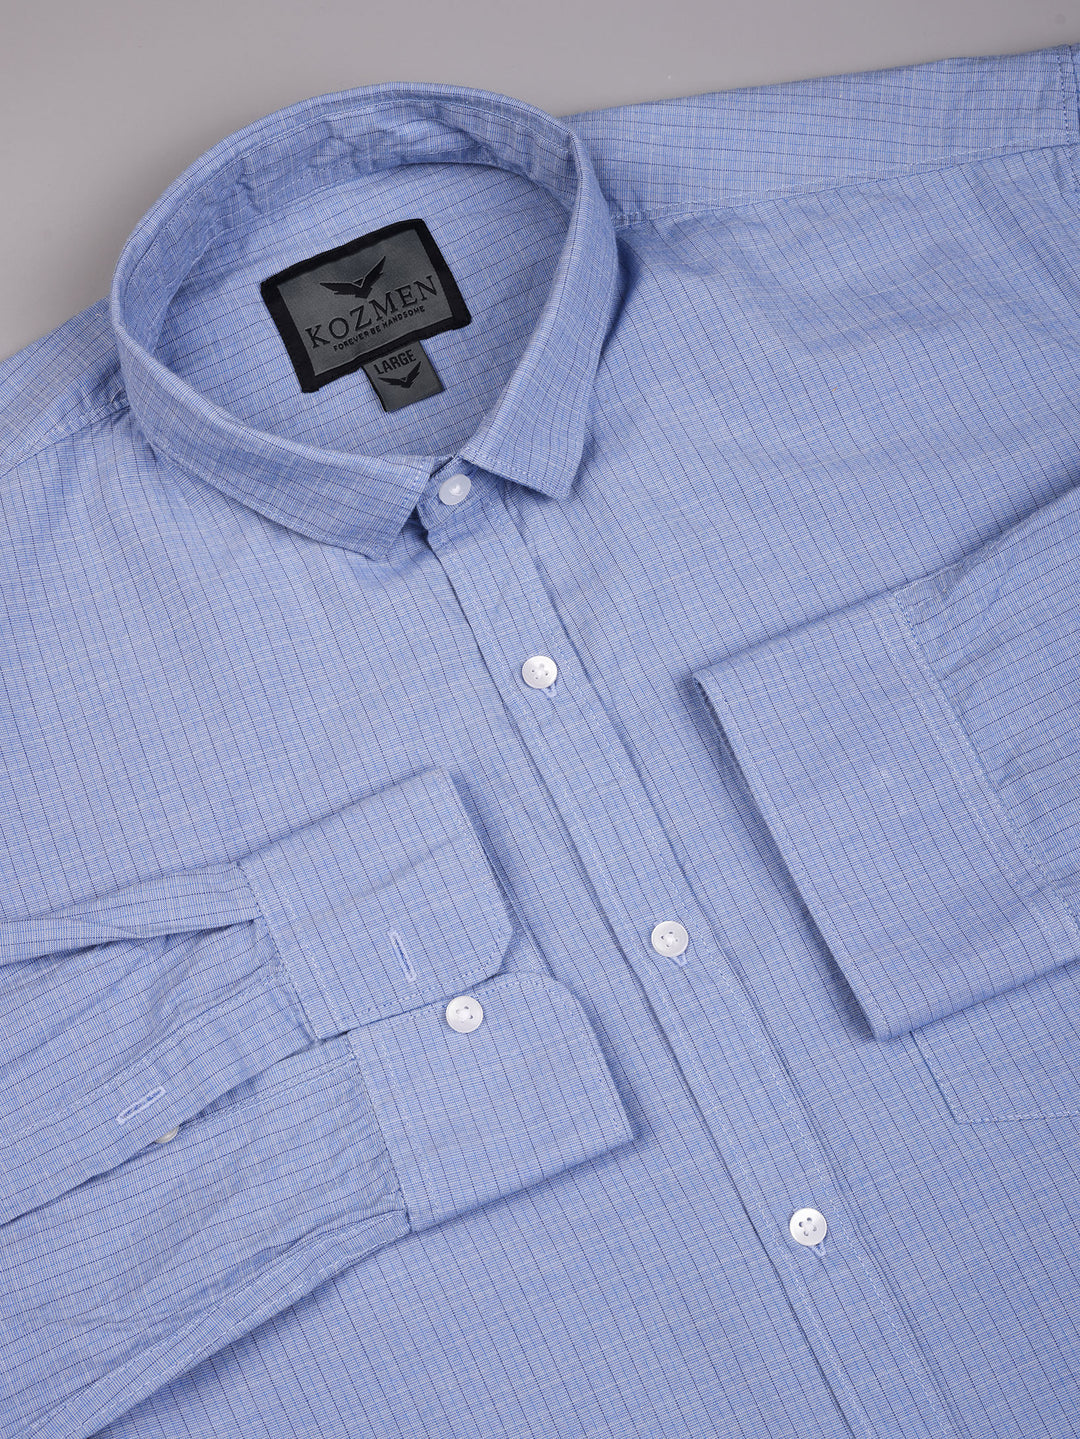 Dark Cobalt Blue Checkered Cotton  Shirt